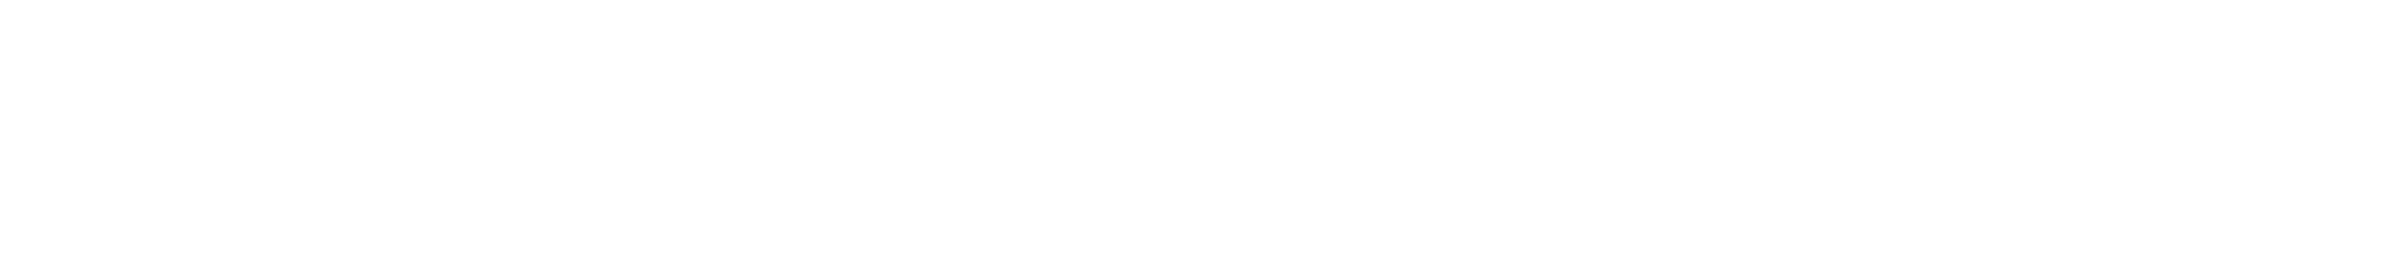 Digon Design Logo - White Color